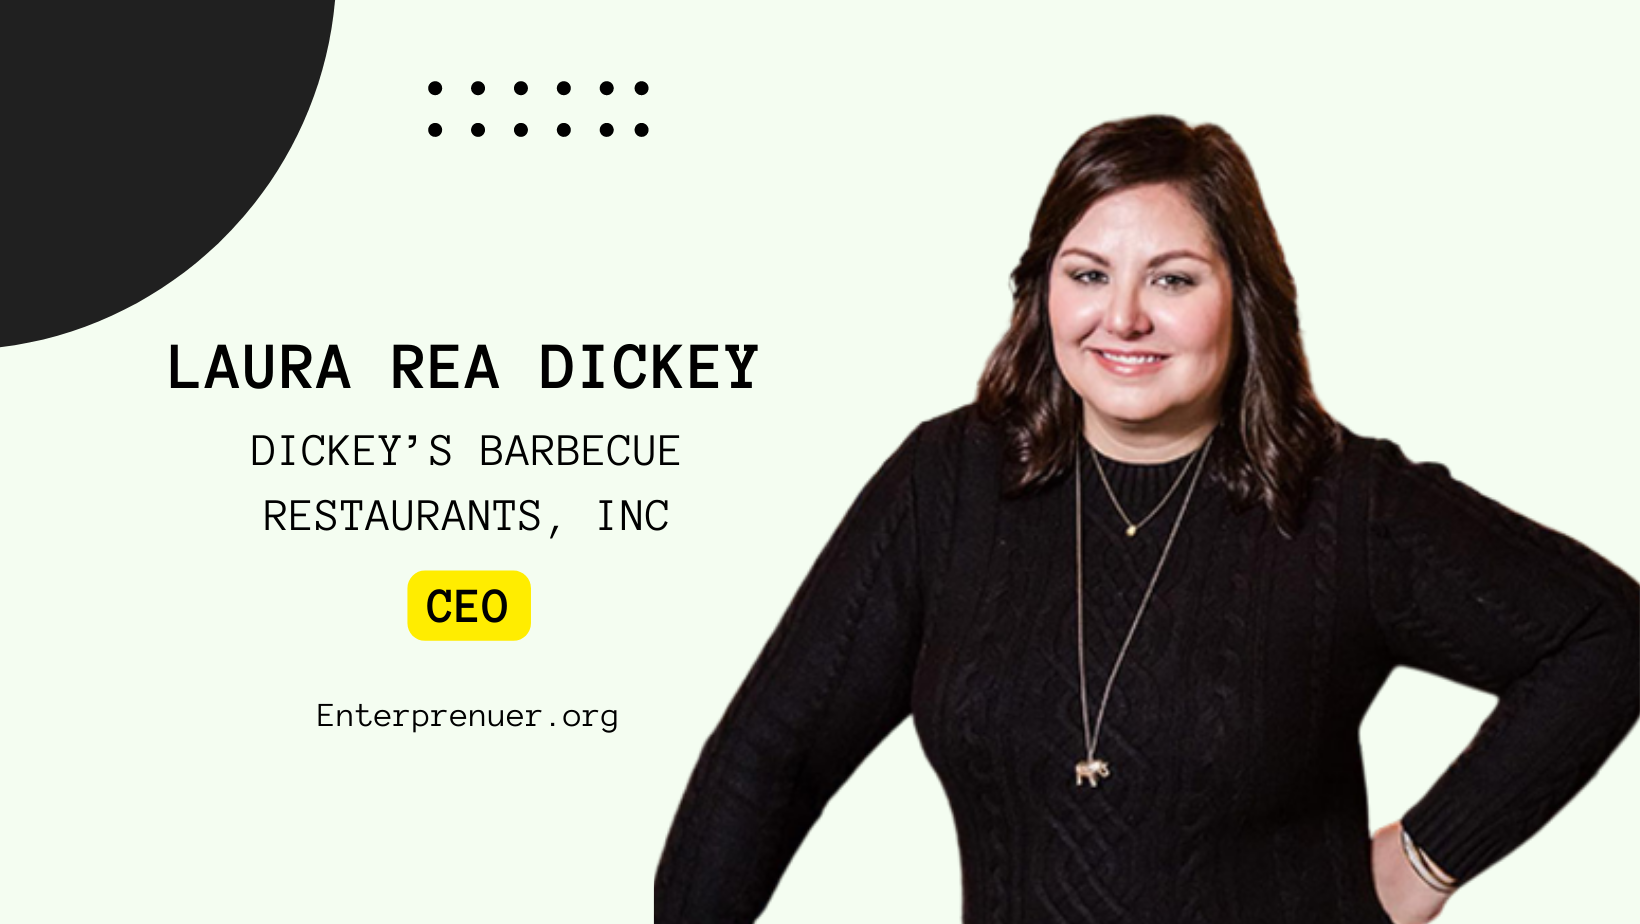 Laura Rea Dickey CEO of Dickey’s Barbecue Restaurants, Inc.